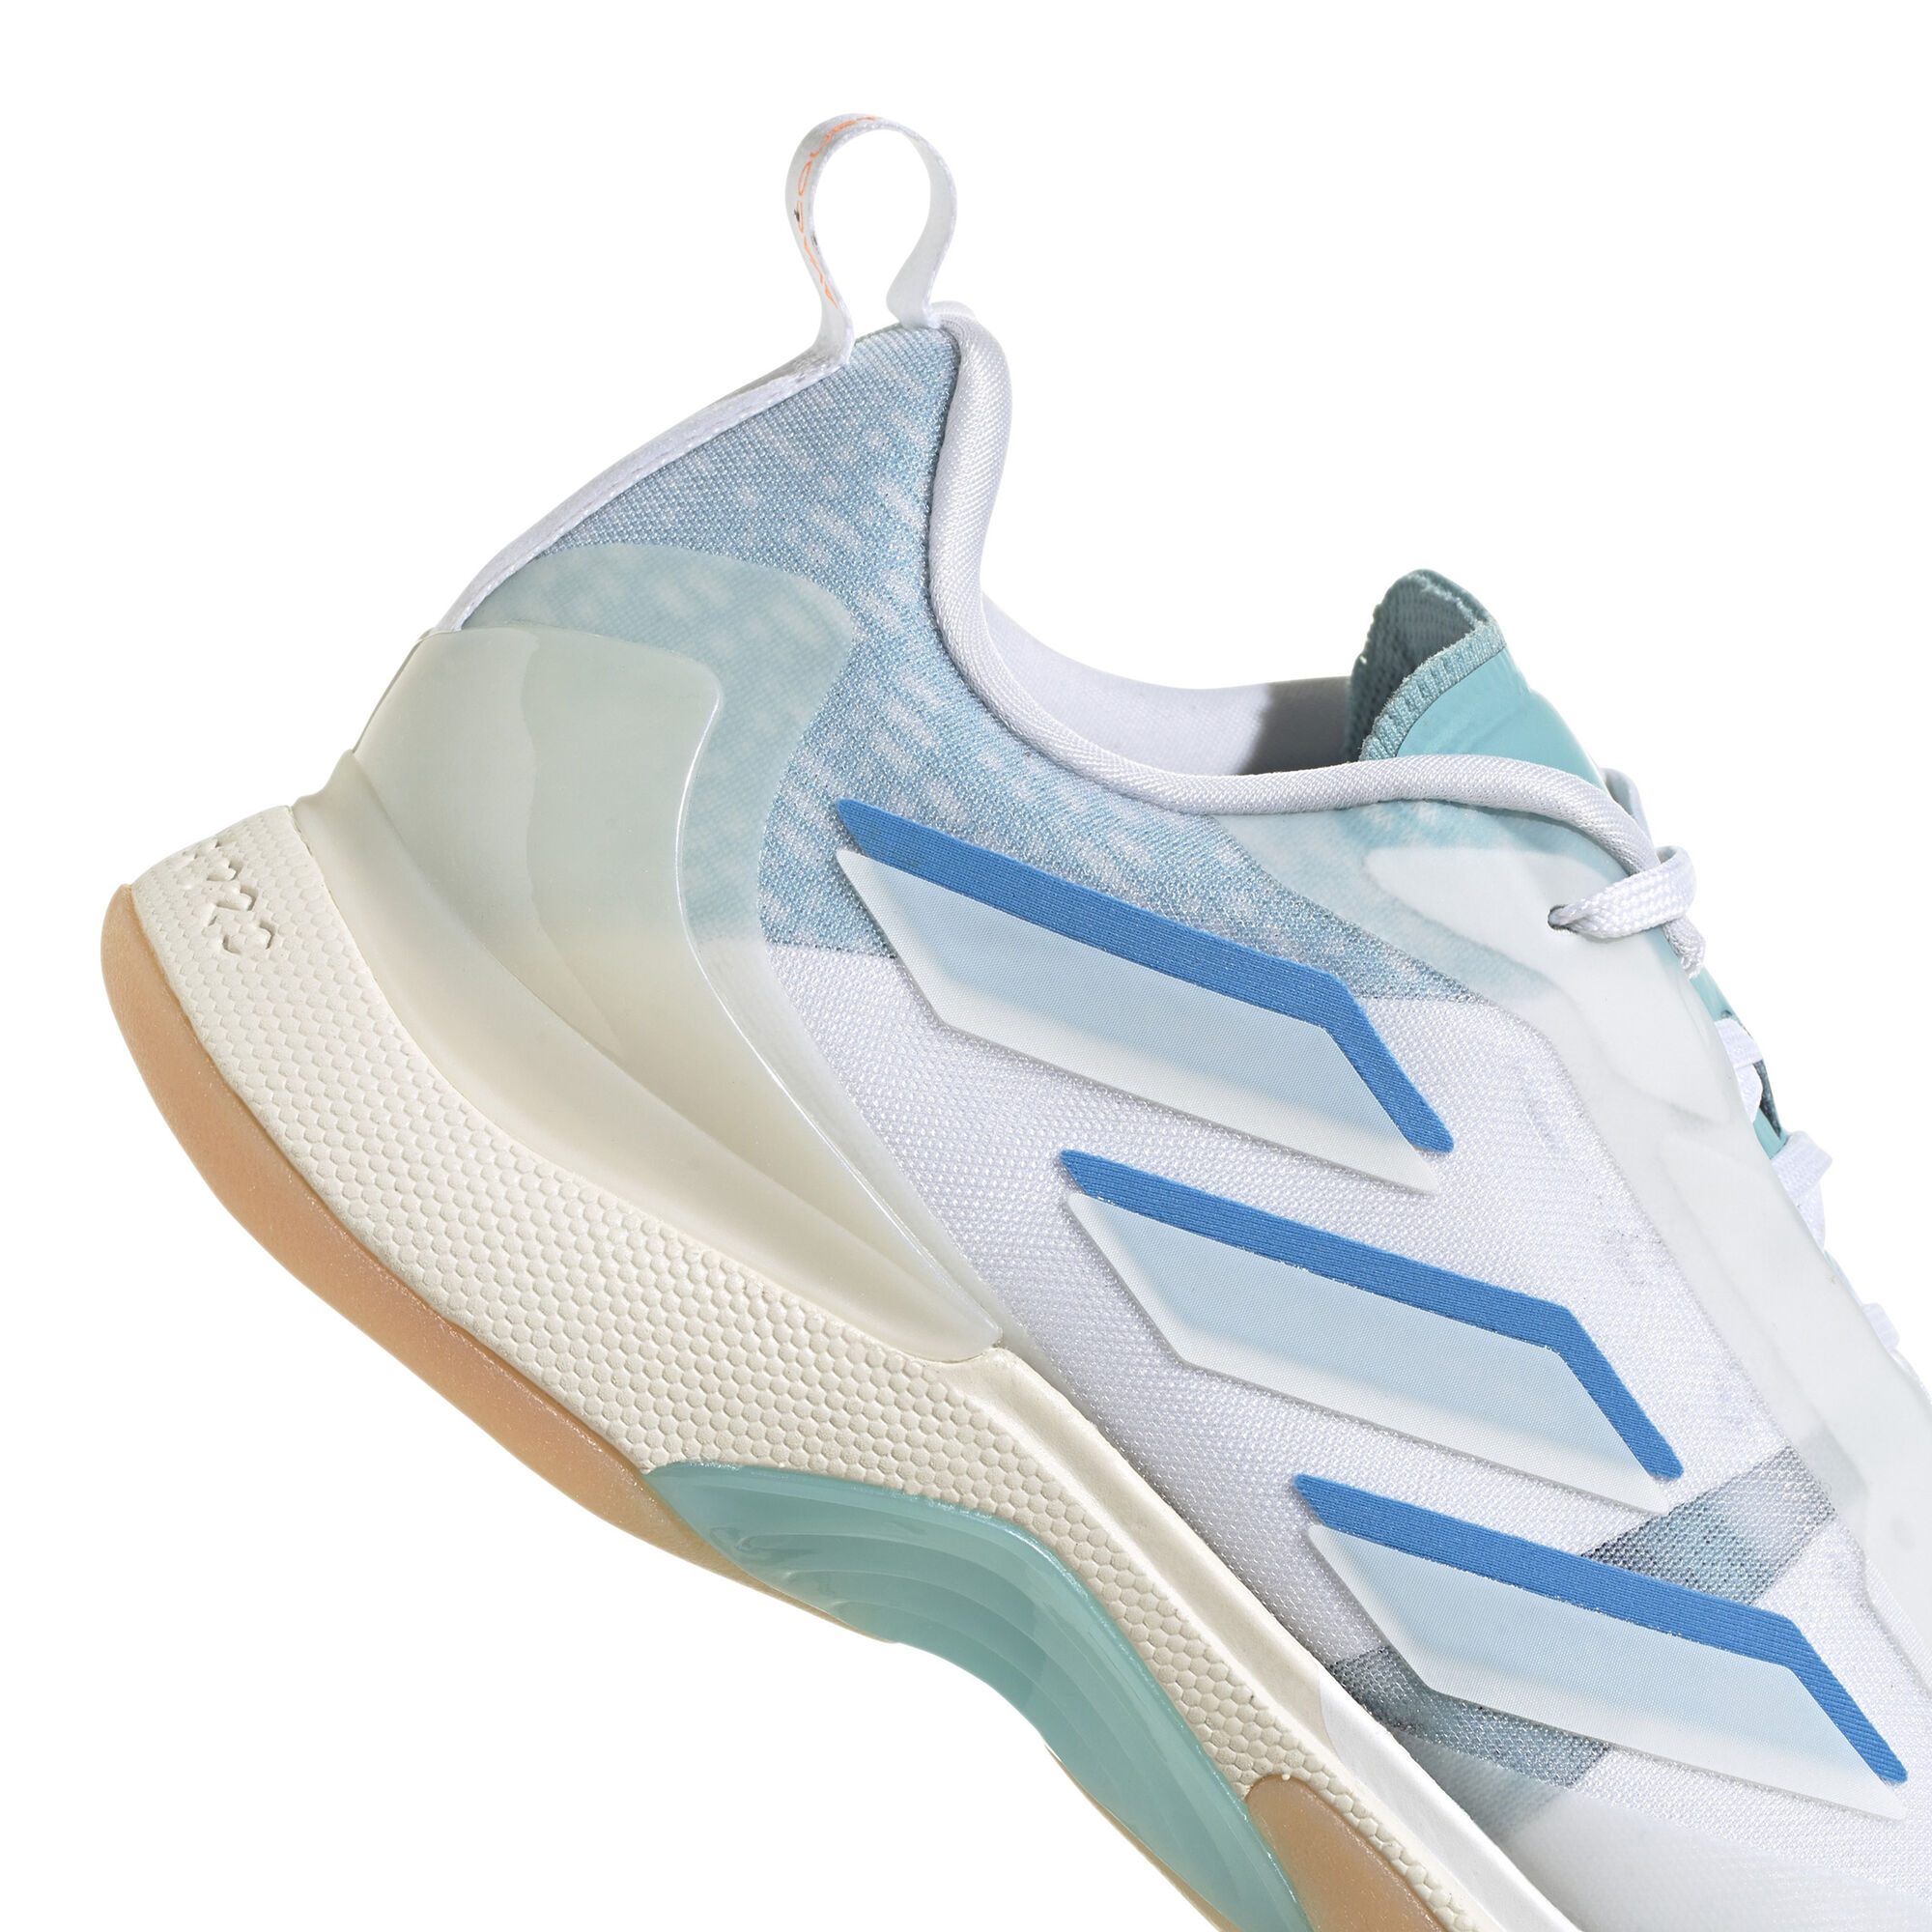 adidas Barricade Parley White/Blue Women's Tennis Shoes